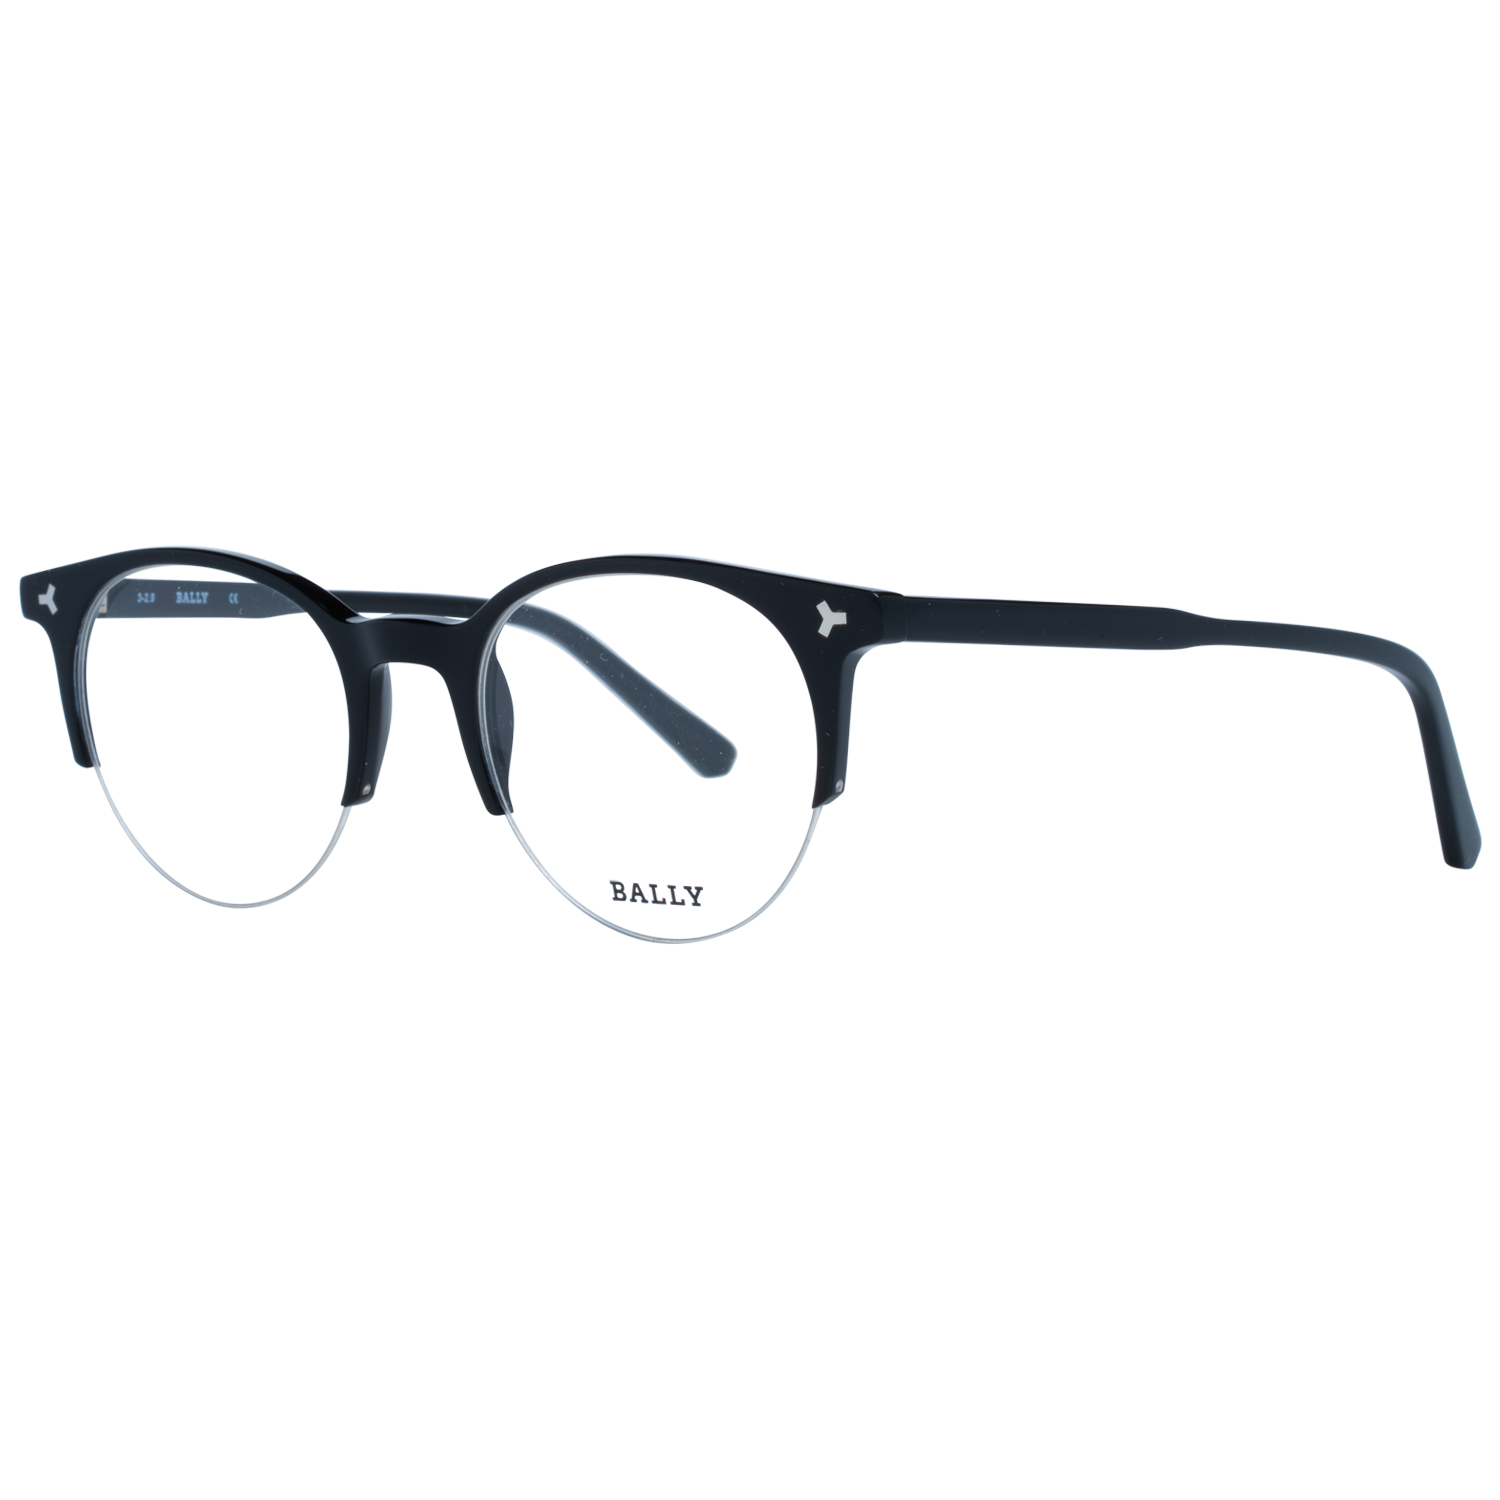 Bally Optical Frame Bally Eyeglasses Frames BY5018 001 47 Eyeglasses Eyewear UK USA Australia 